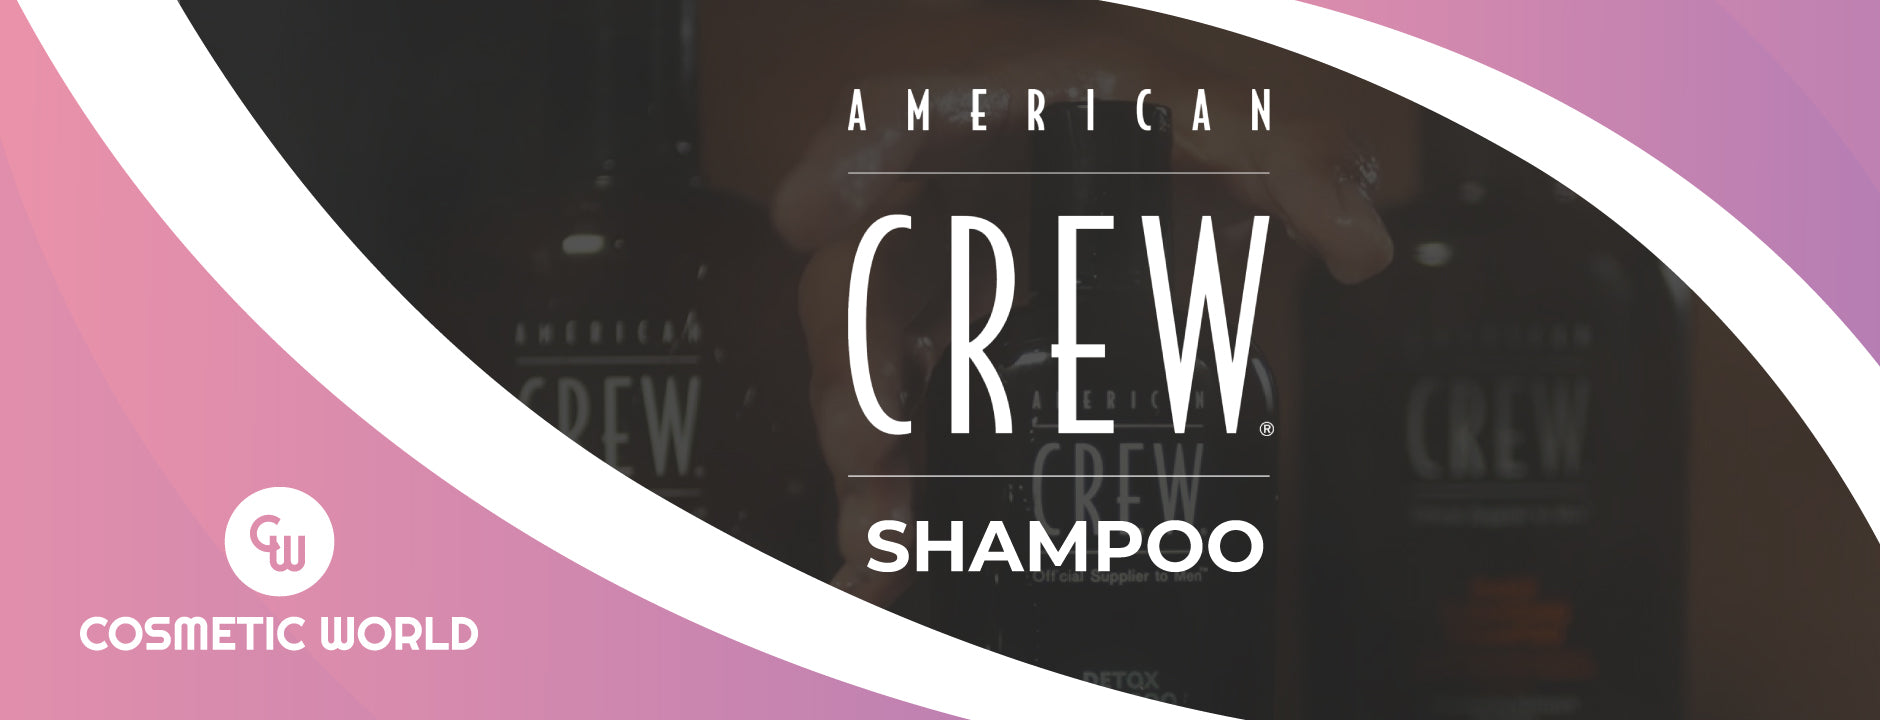 American Crew Shampoo | Cosmetic World